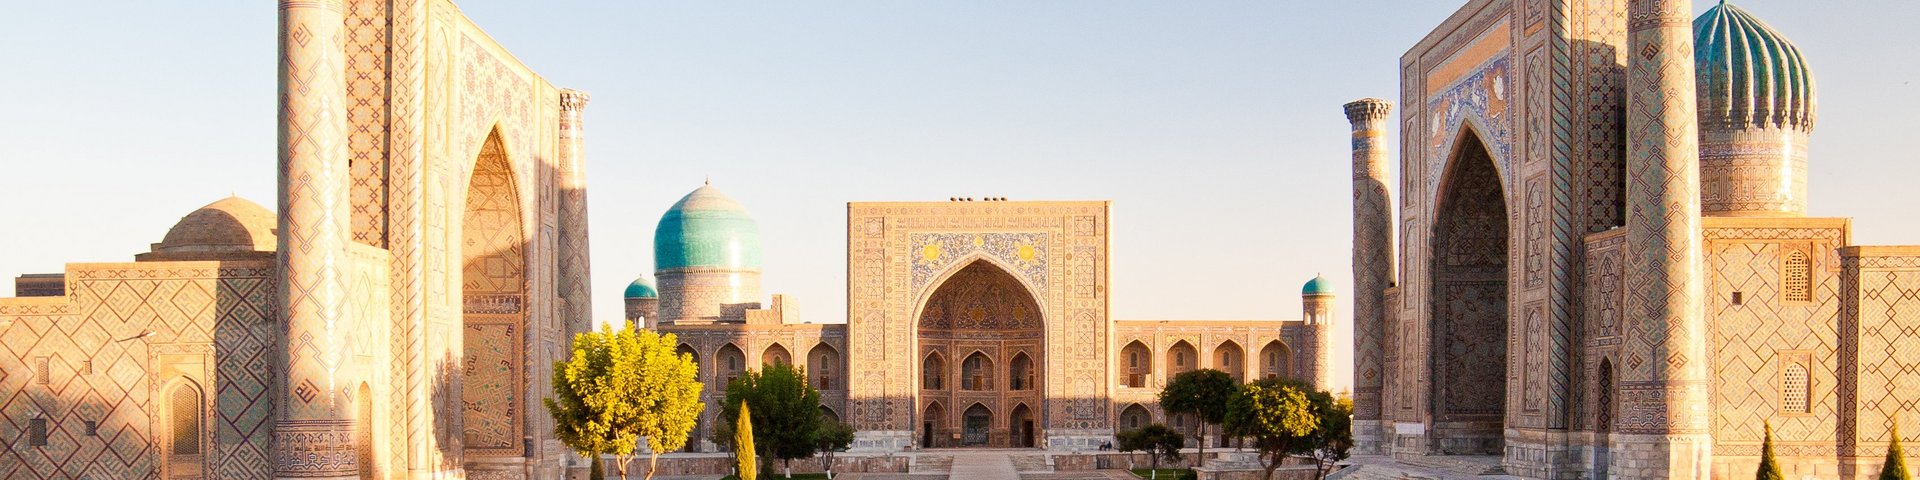 Registan Platz in Samarkand